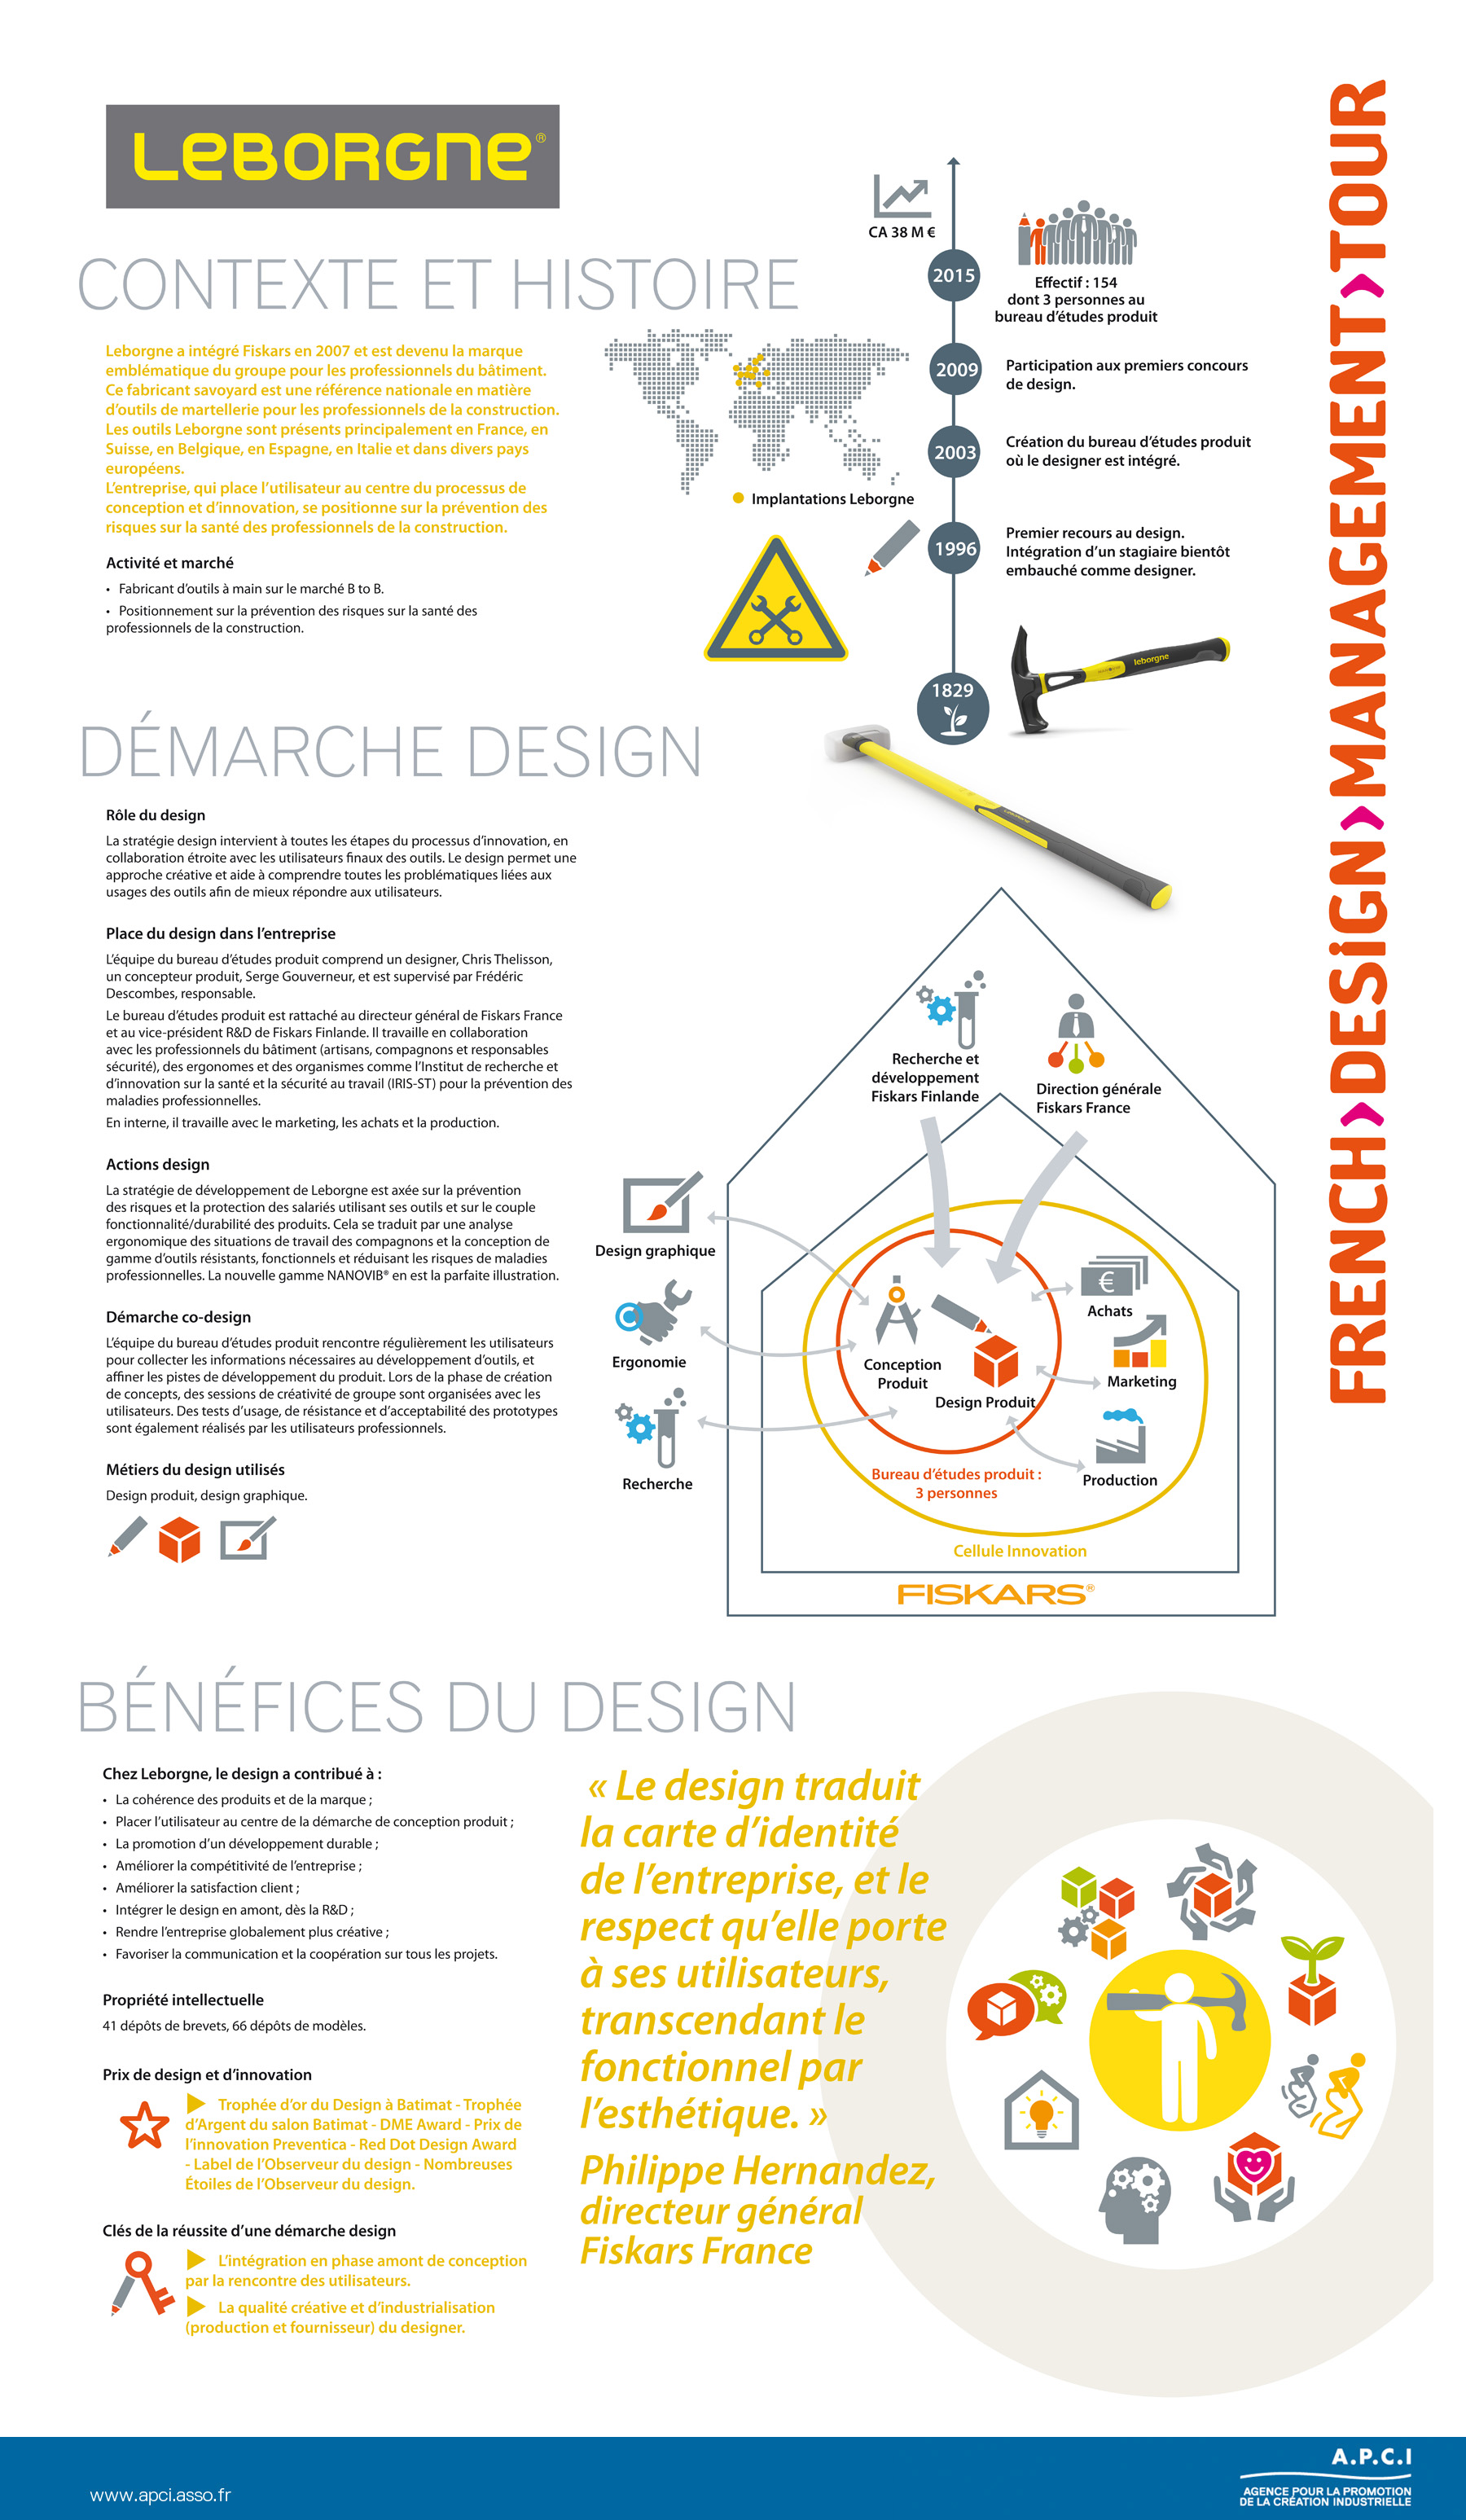 French Design Management Tour - Leborgne